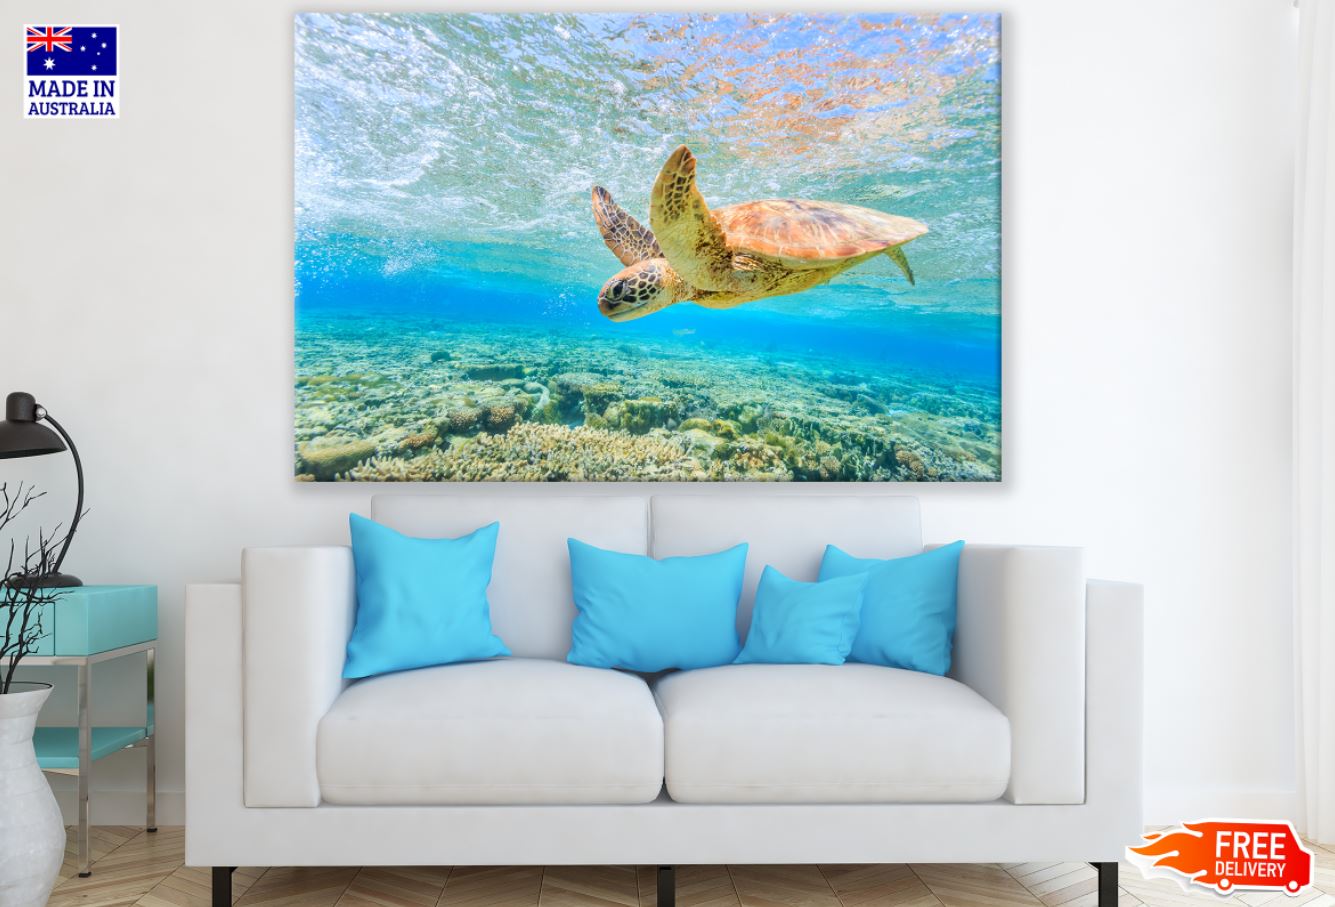 Turtle in Sea Photograph Print 100% Australian Made